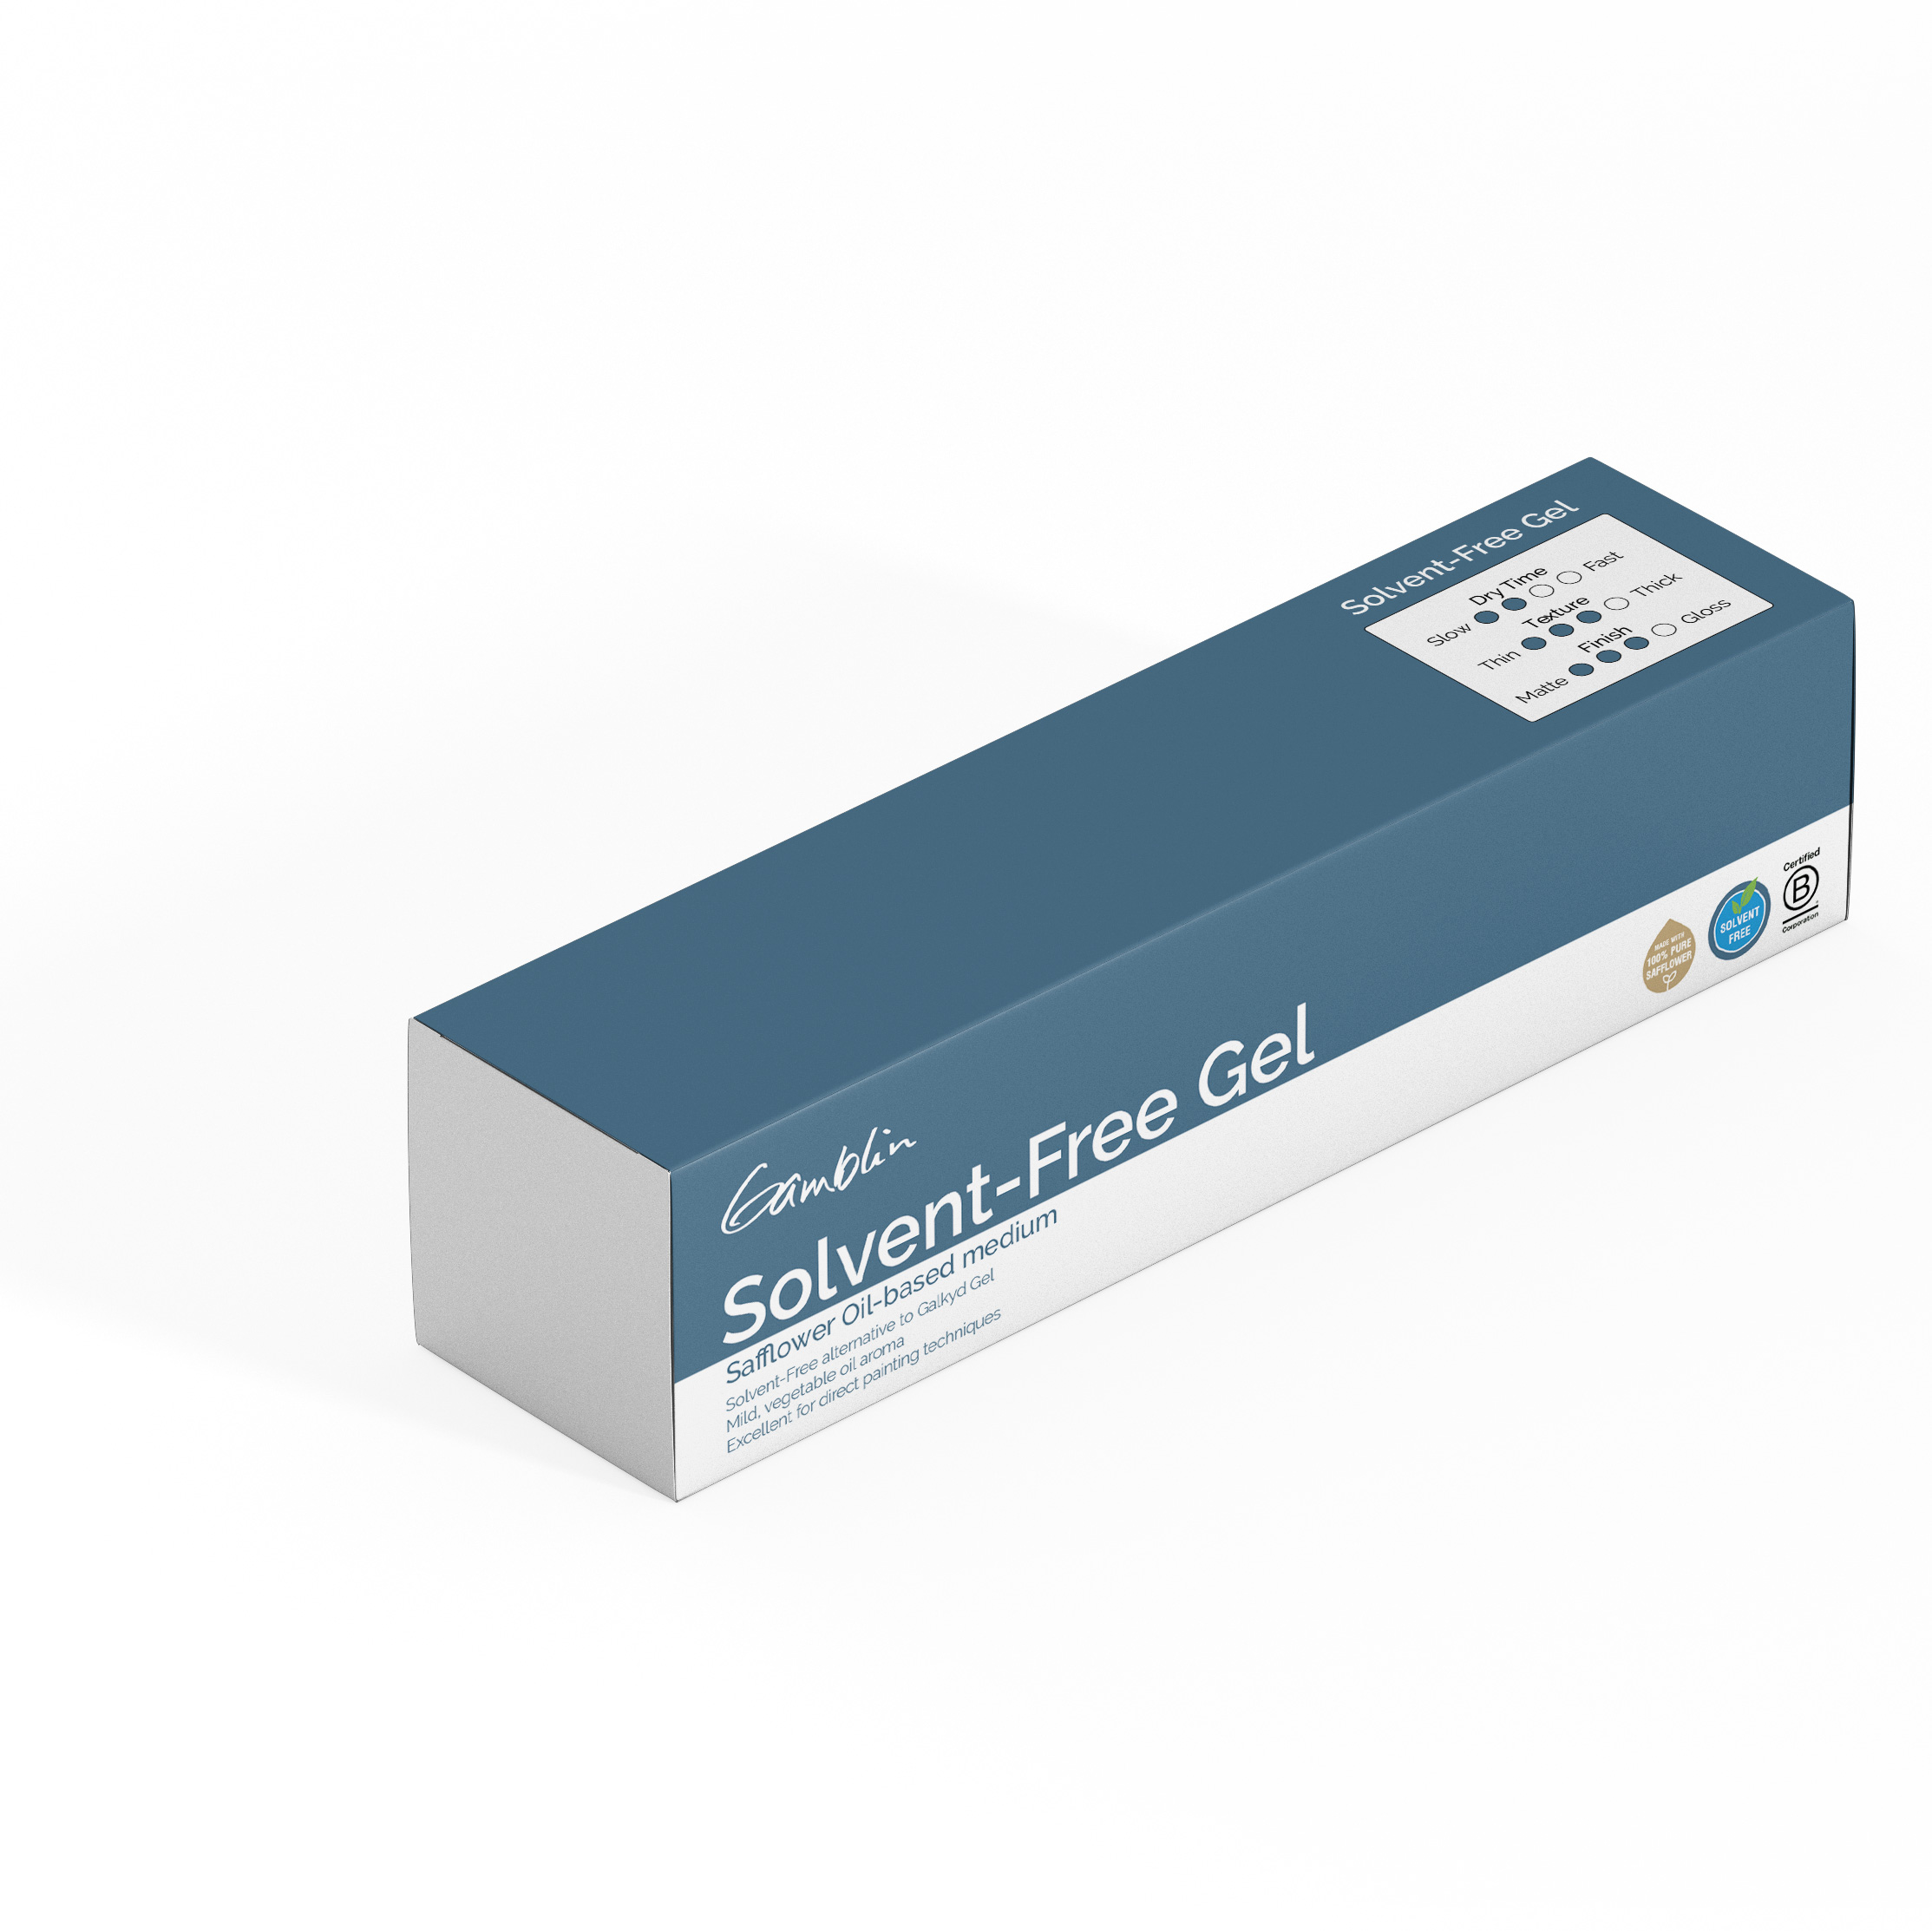 Solvent free gel 150ml box